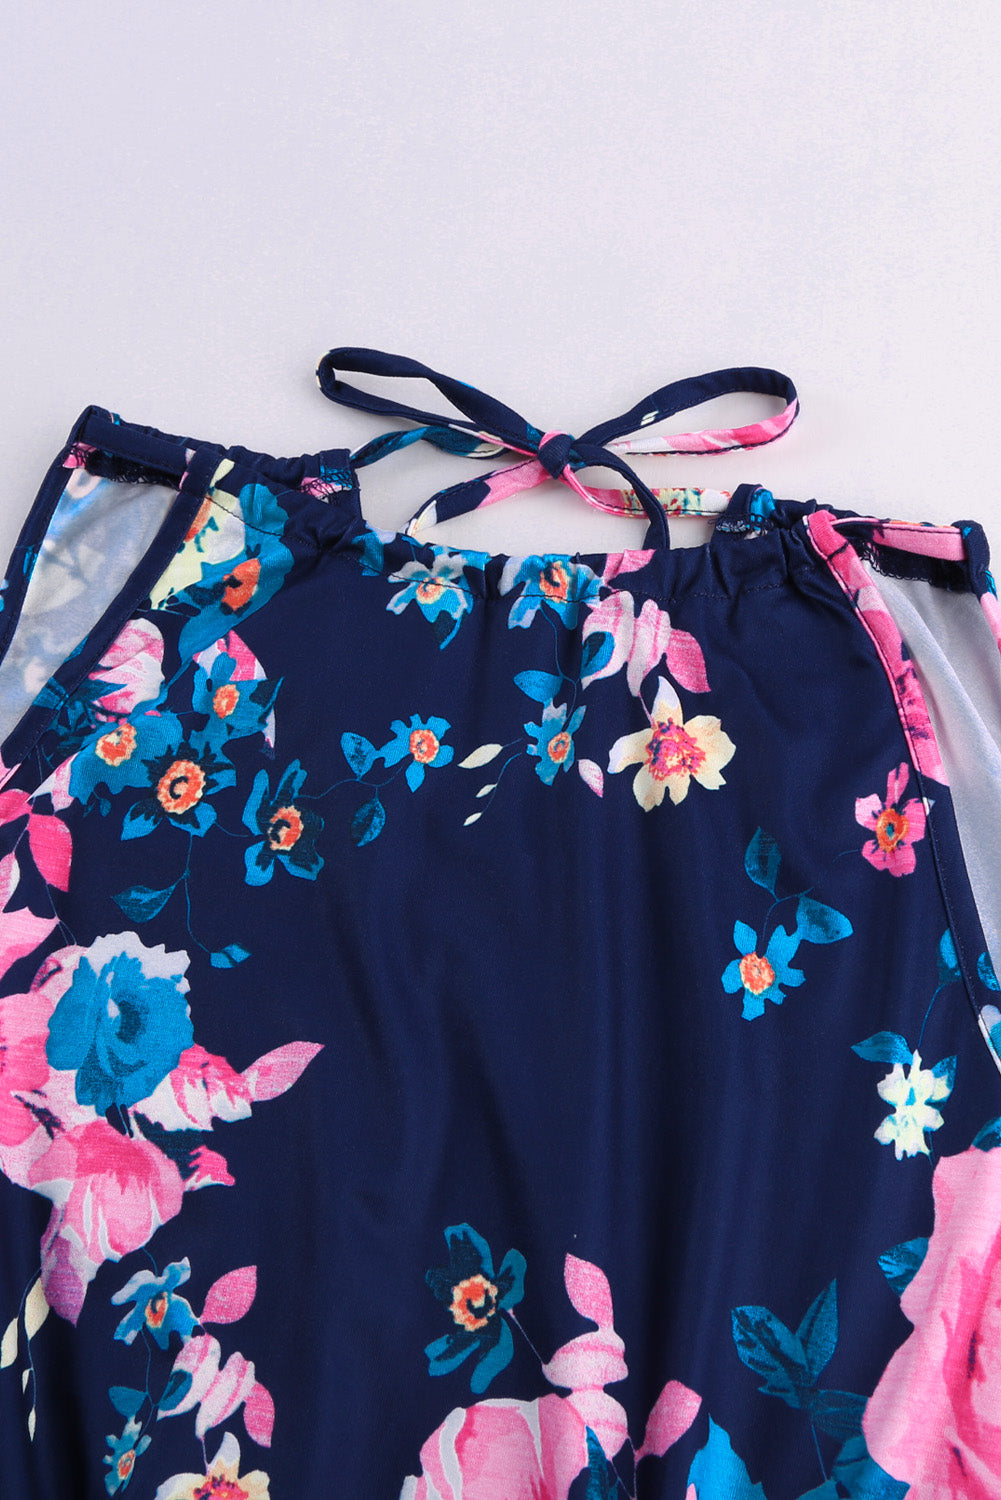 Women's Casual Summer Jumpsuit Sleeveless Playsuit Print Short Cami Rompers Sai Feel